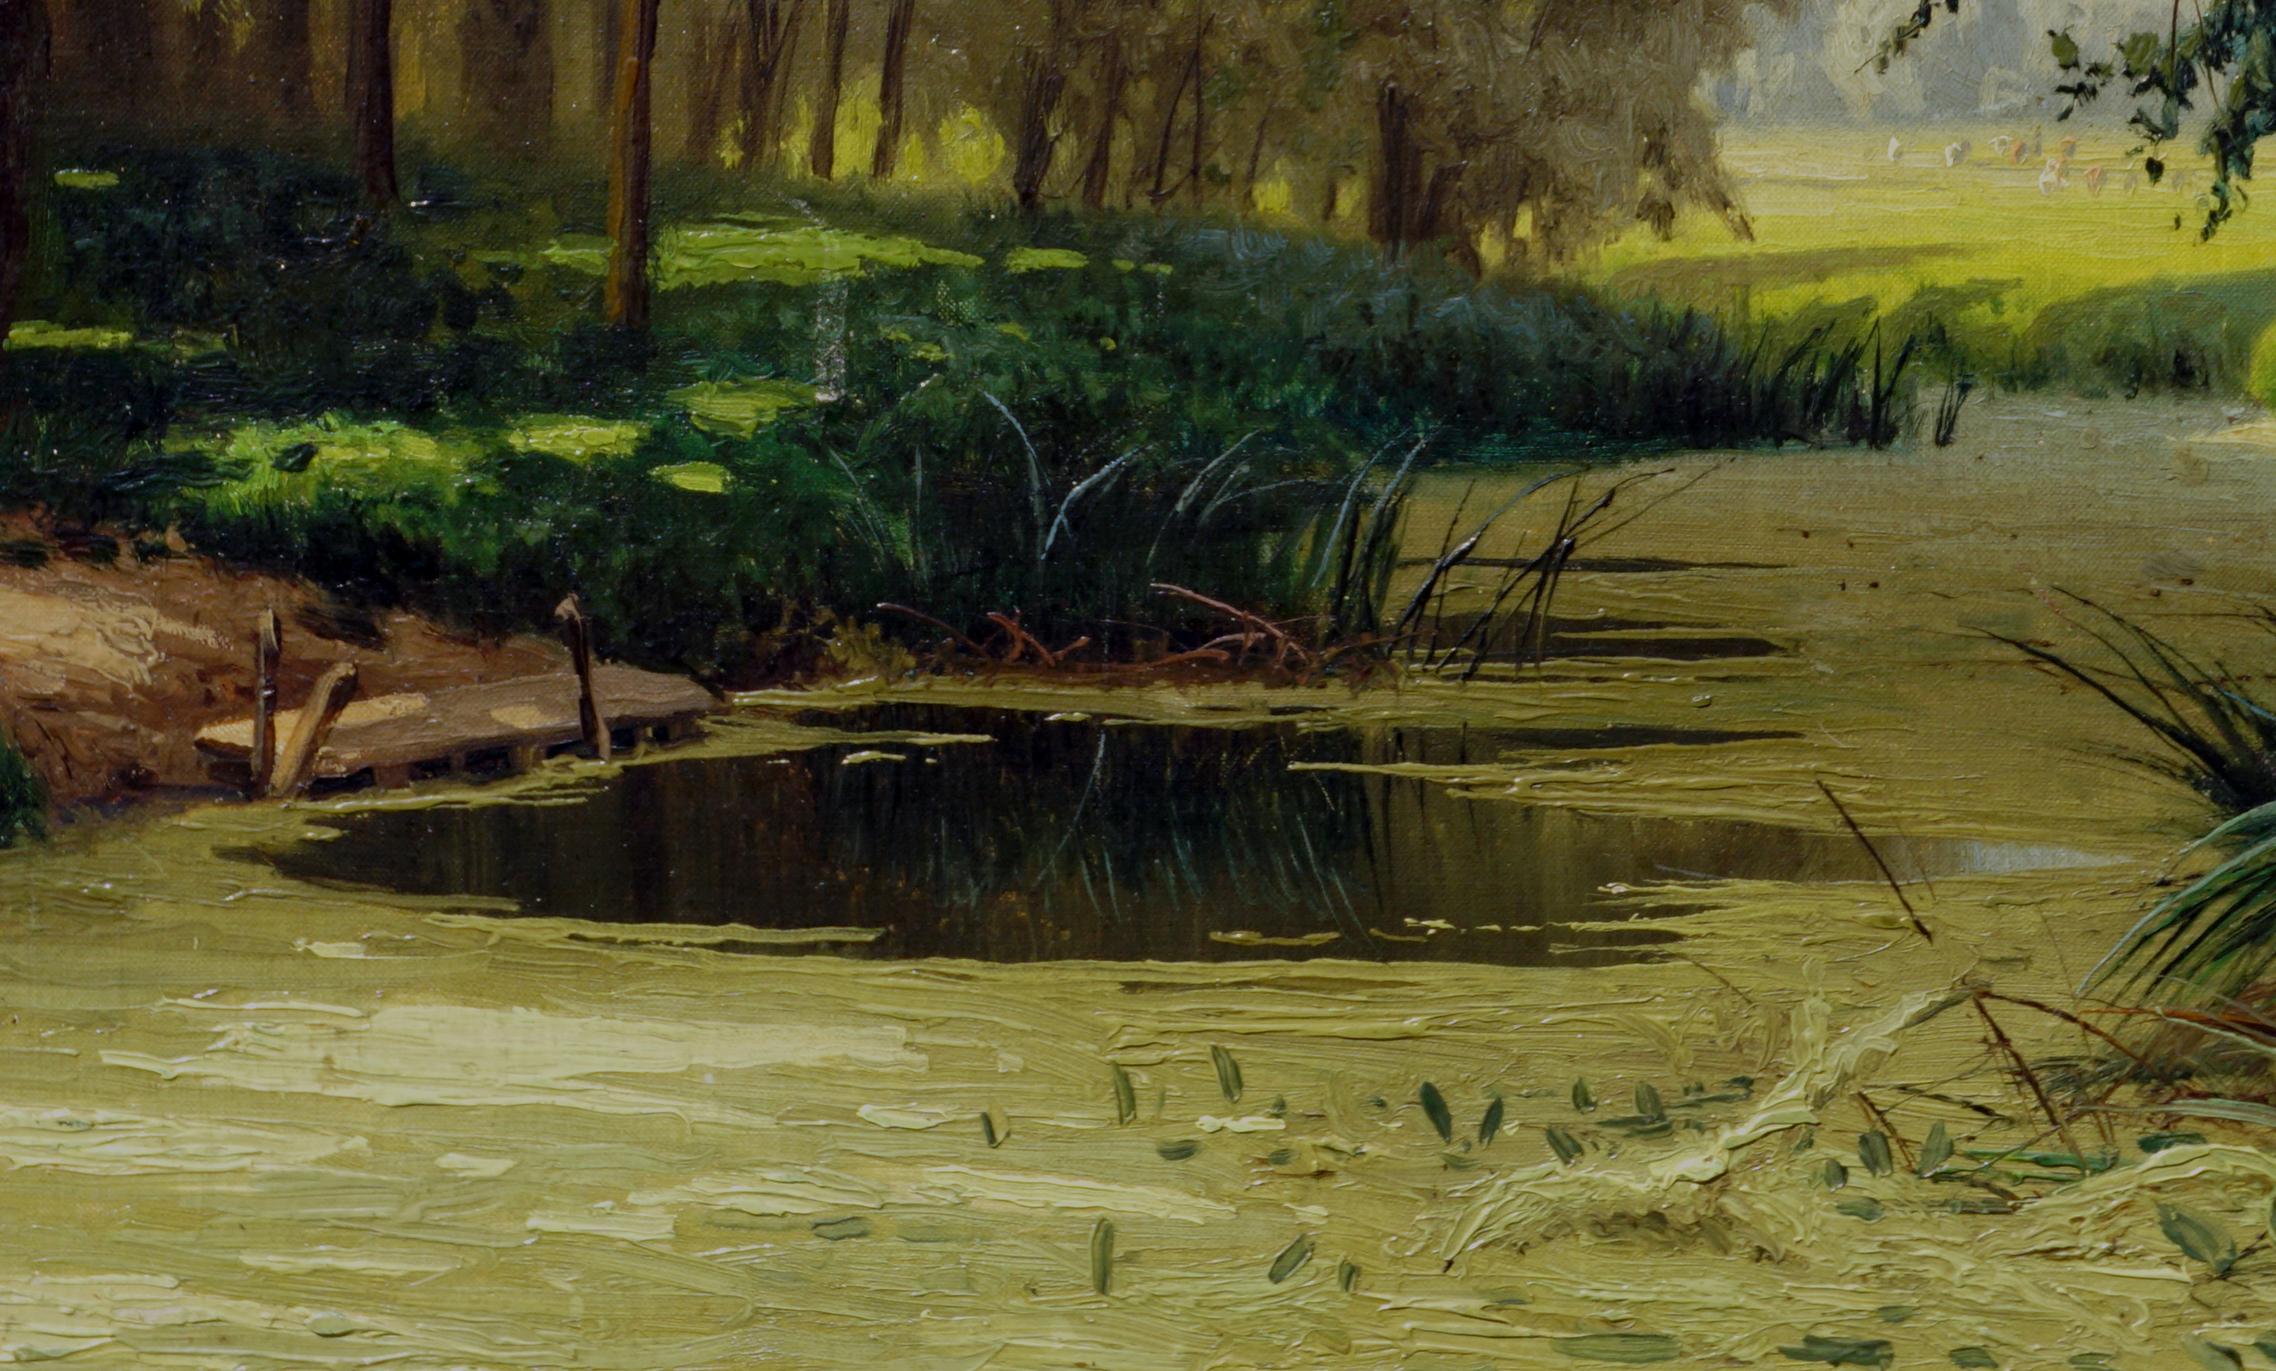 Shady Stream - Late 19th Century Bucolic Landscape - Black Landscape Painting by Nikolai Aleksandrovich Sergeev (Sergeyev)